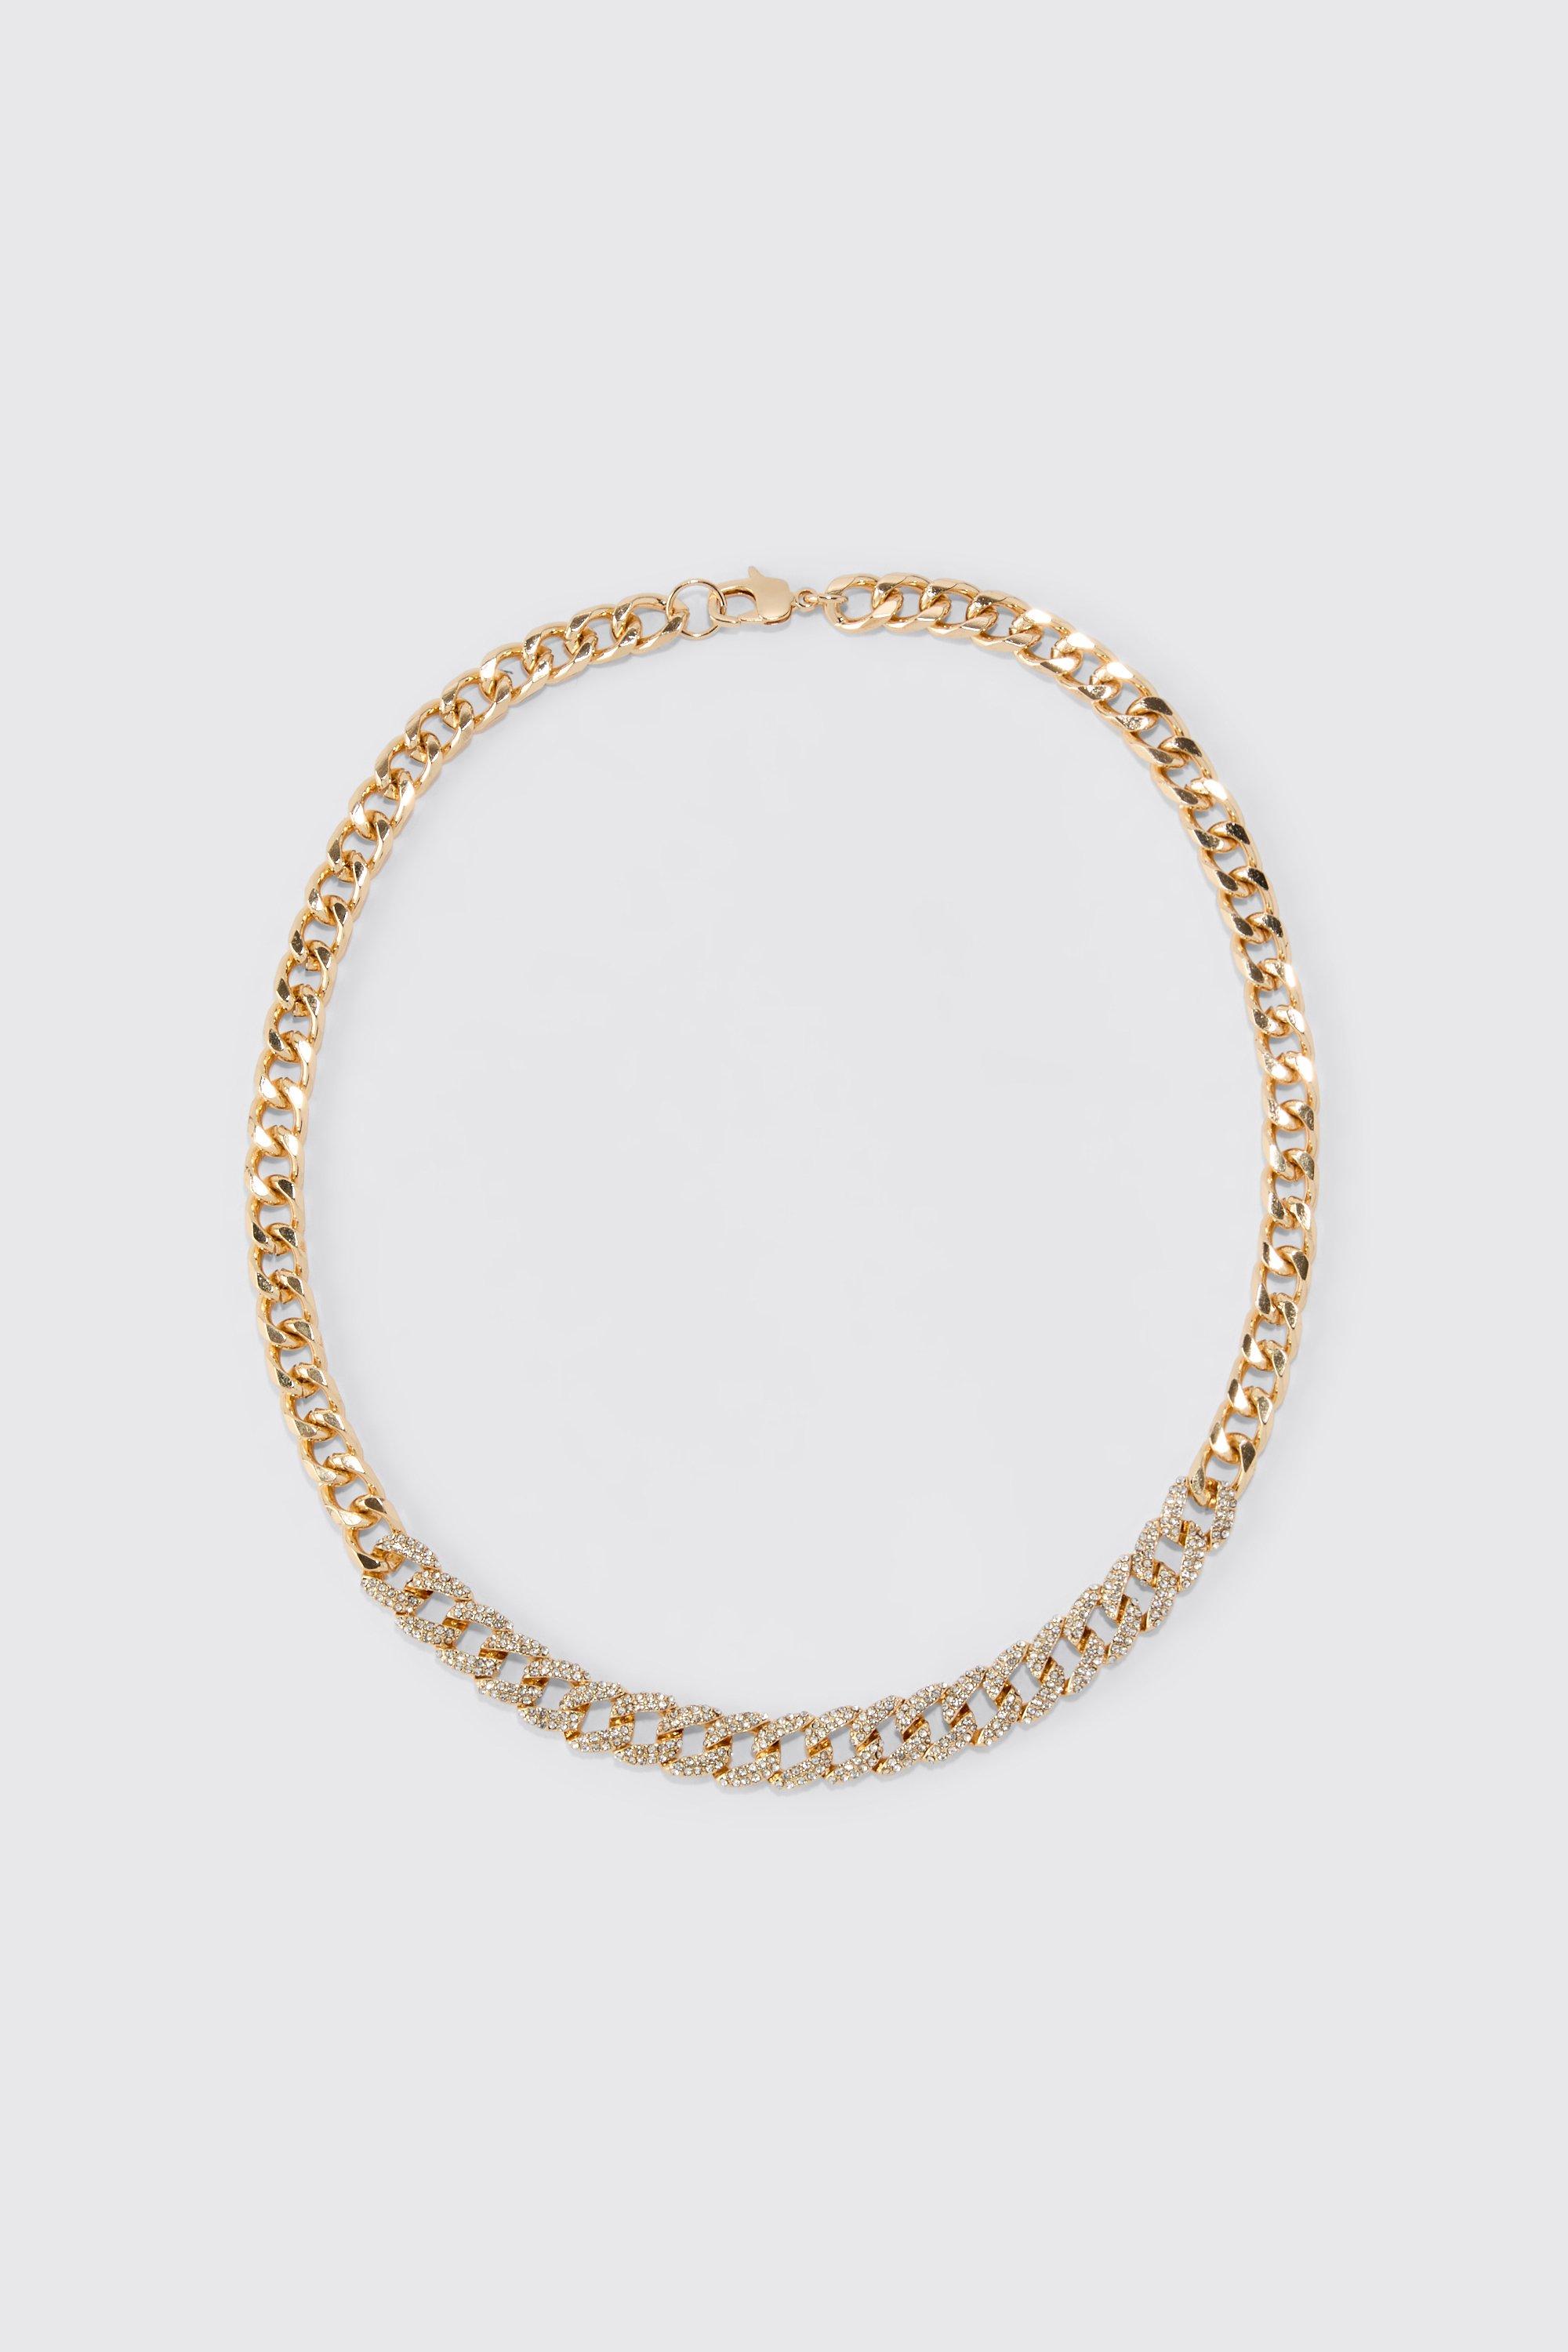 collier en chaîne strassée homme - or - one size, or